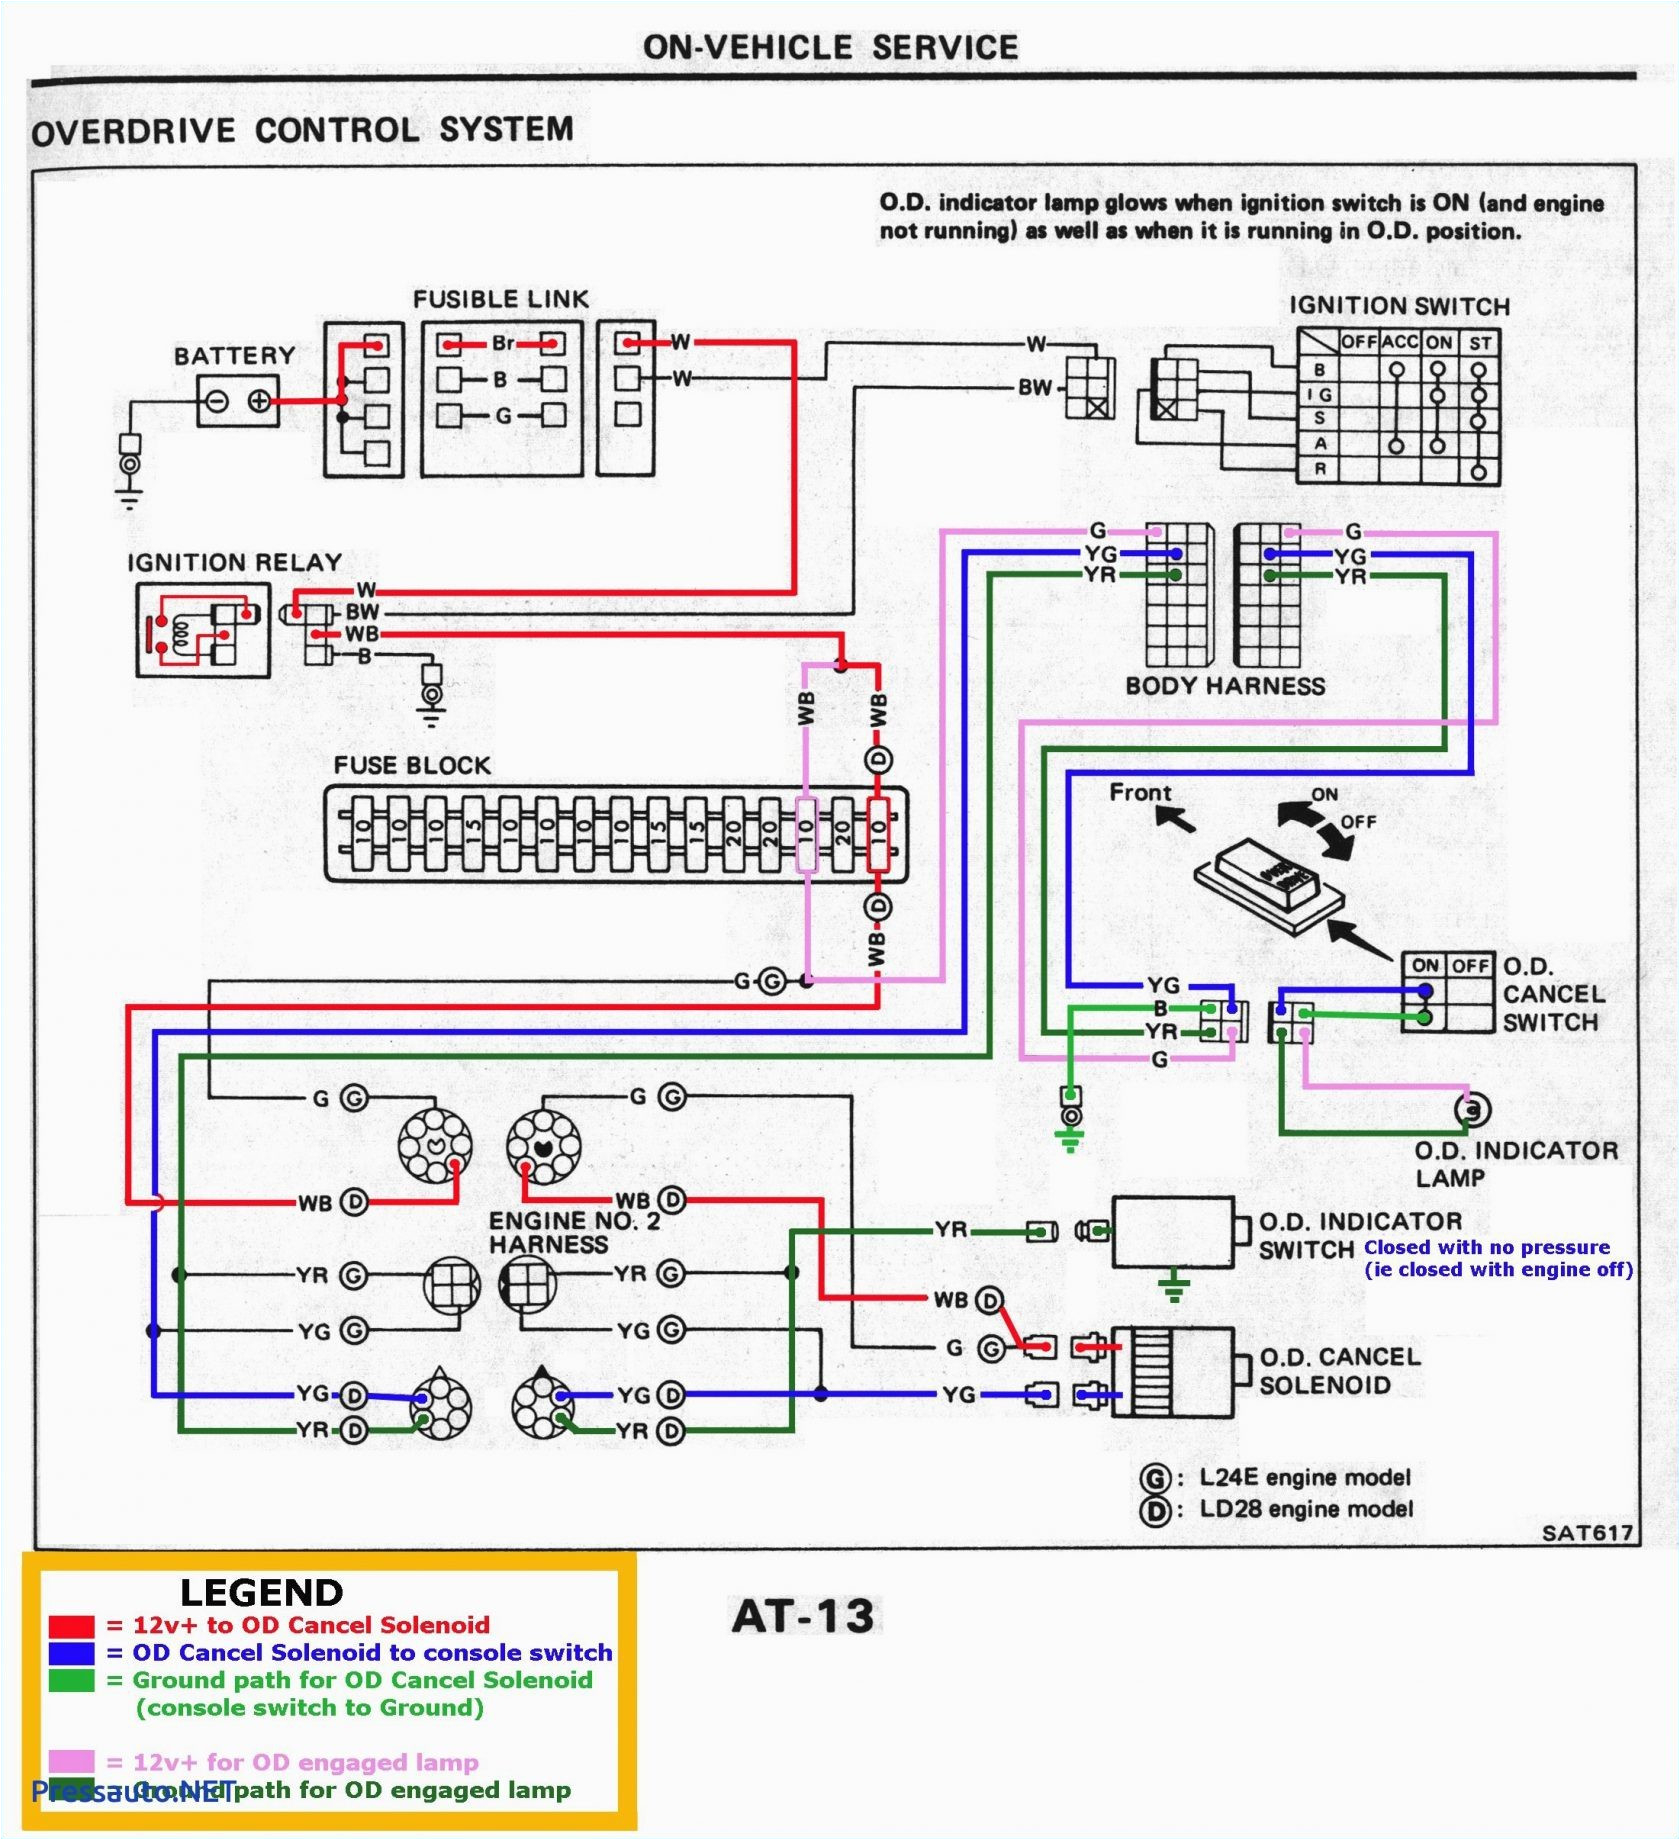 2001 mitsubishi eclipse wiring diagram rate caravan wiring diagram australia valid engine test stand wiring of 2001 mitsubishi eclipse wiring diagram jpg